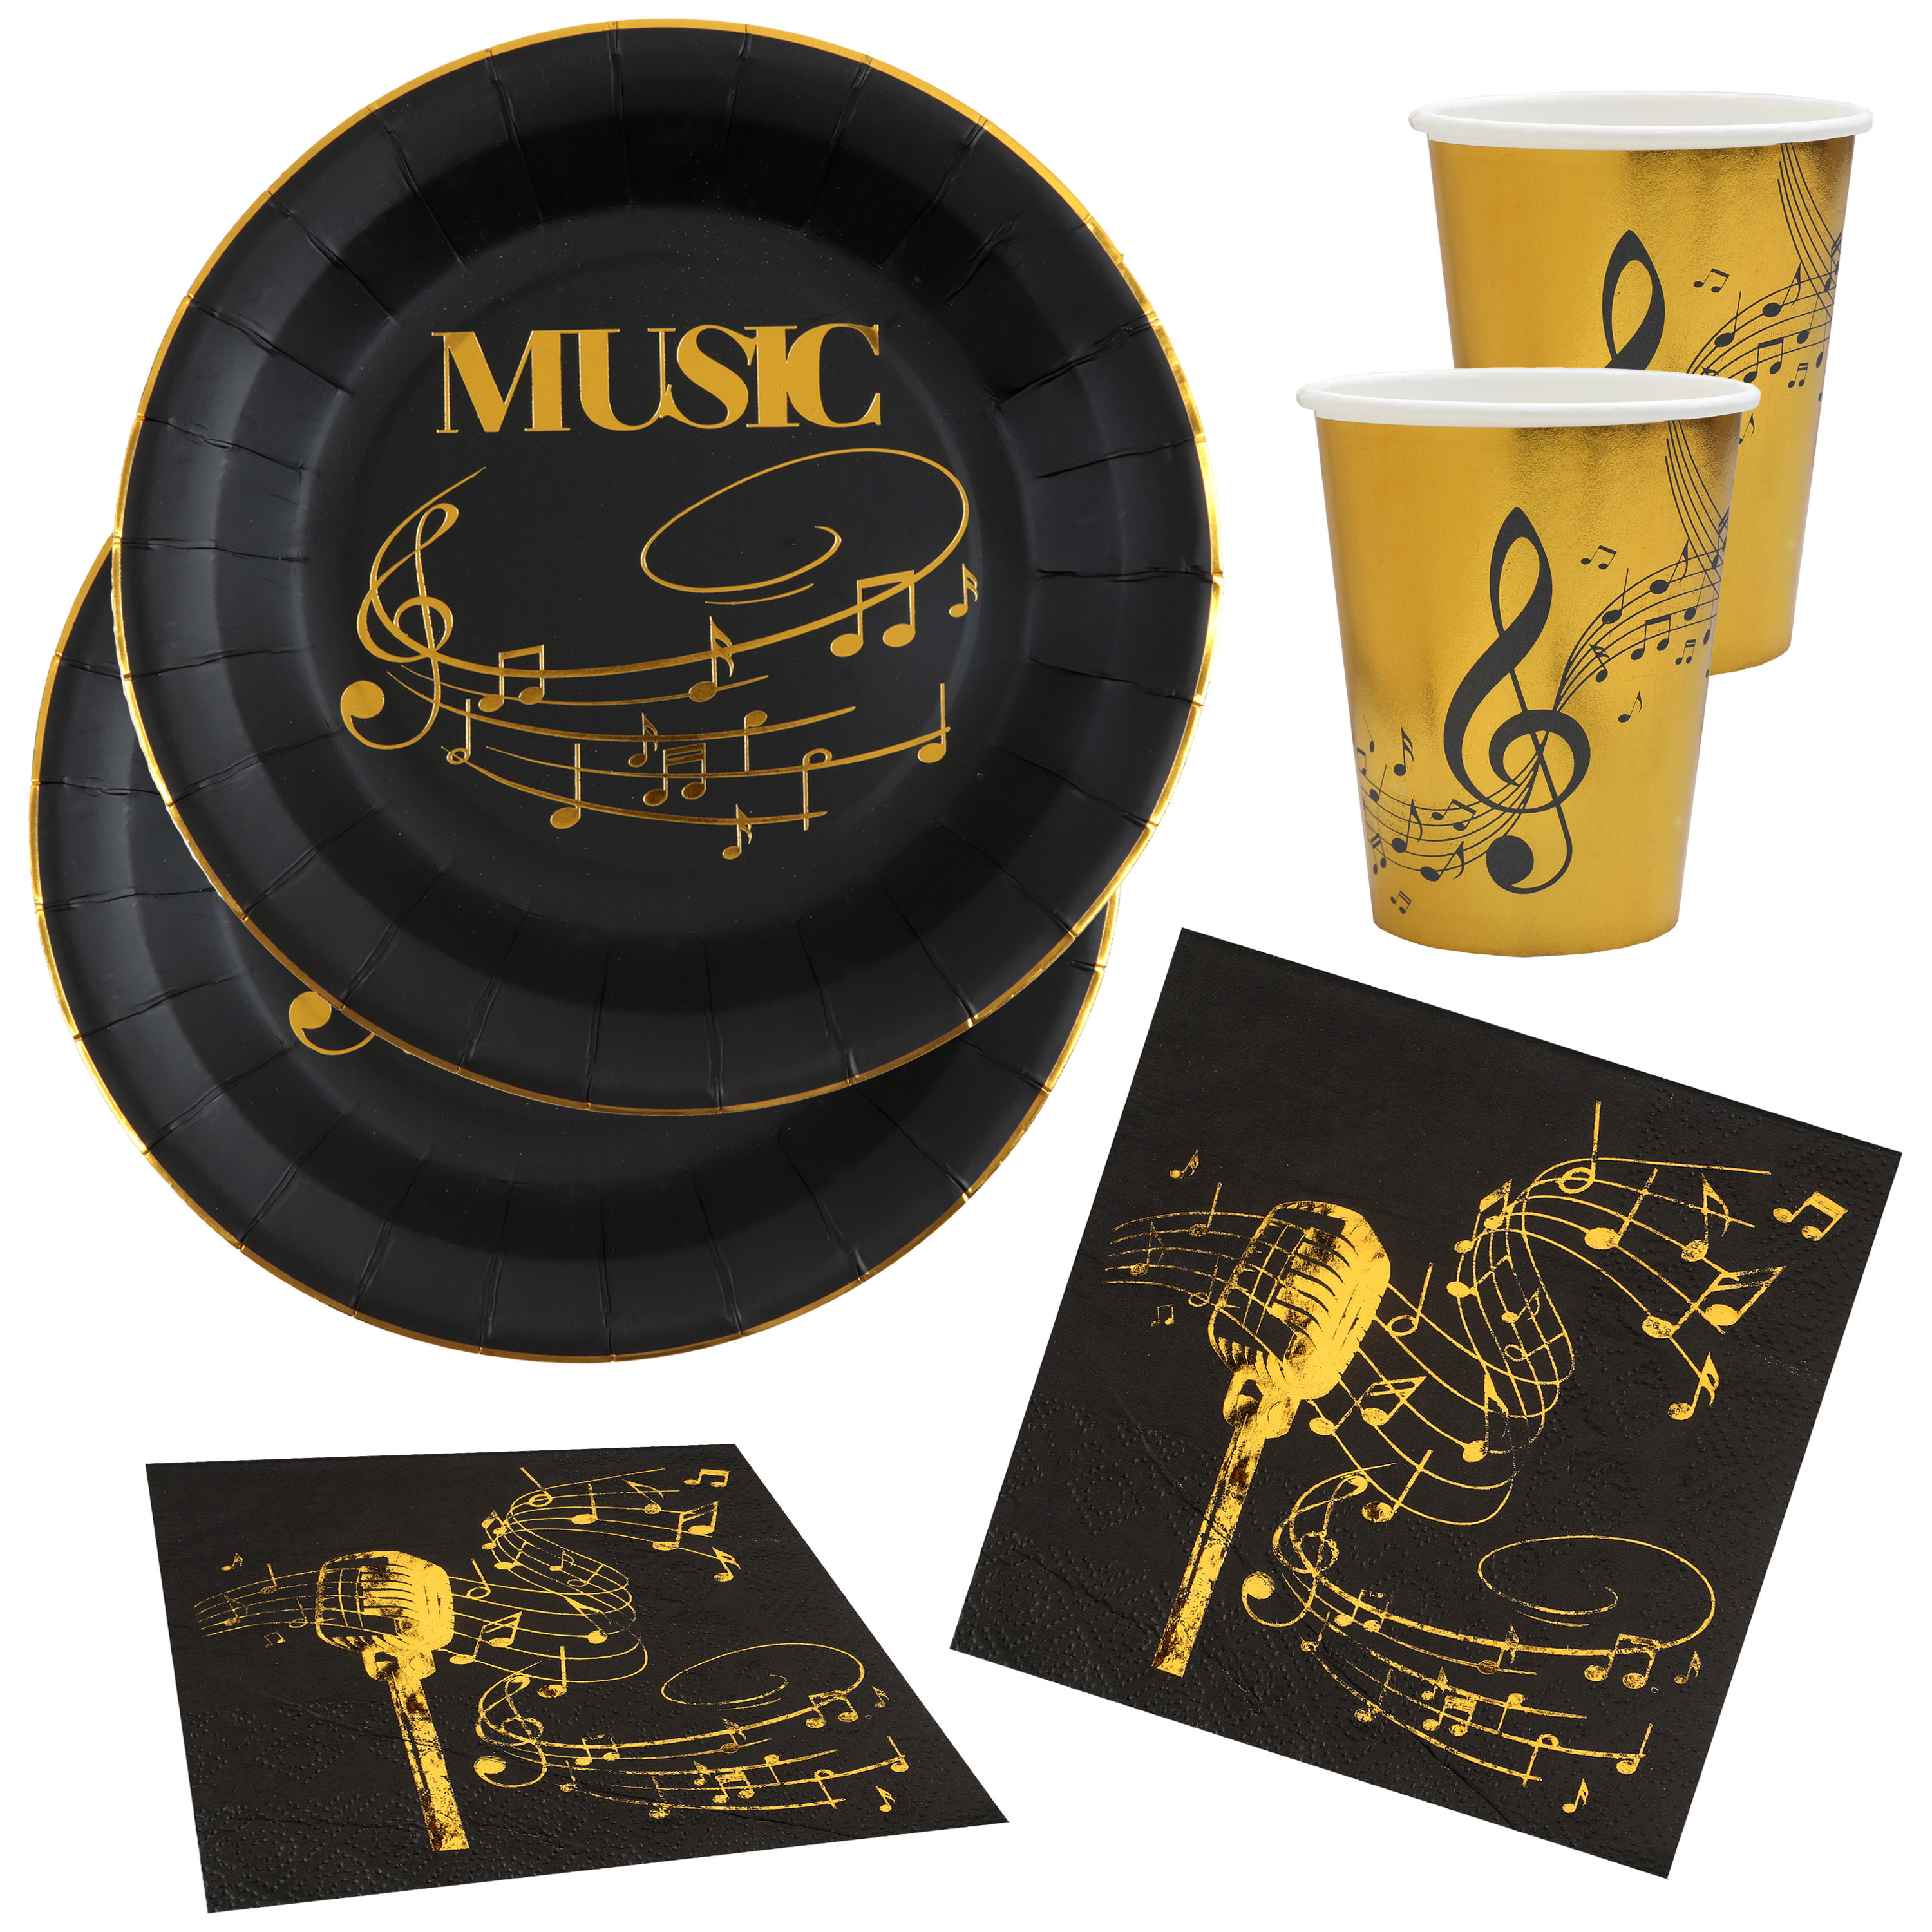 Muziek feest wegwerp servies set 20x bordjes-20x bekers-20x servetten goud-zwart